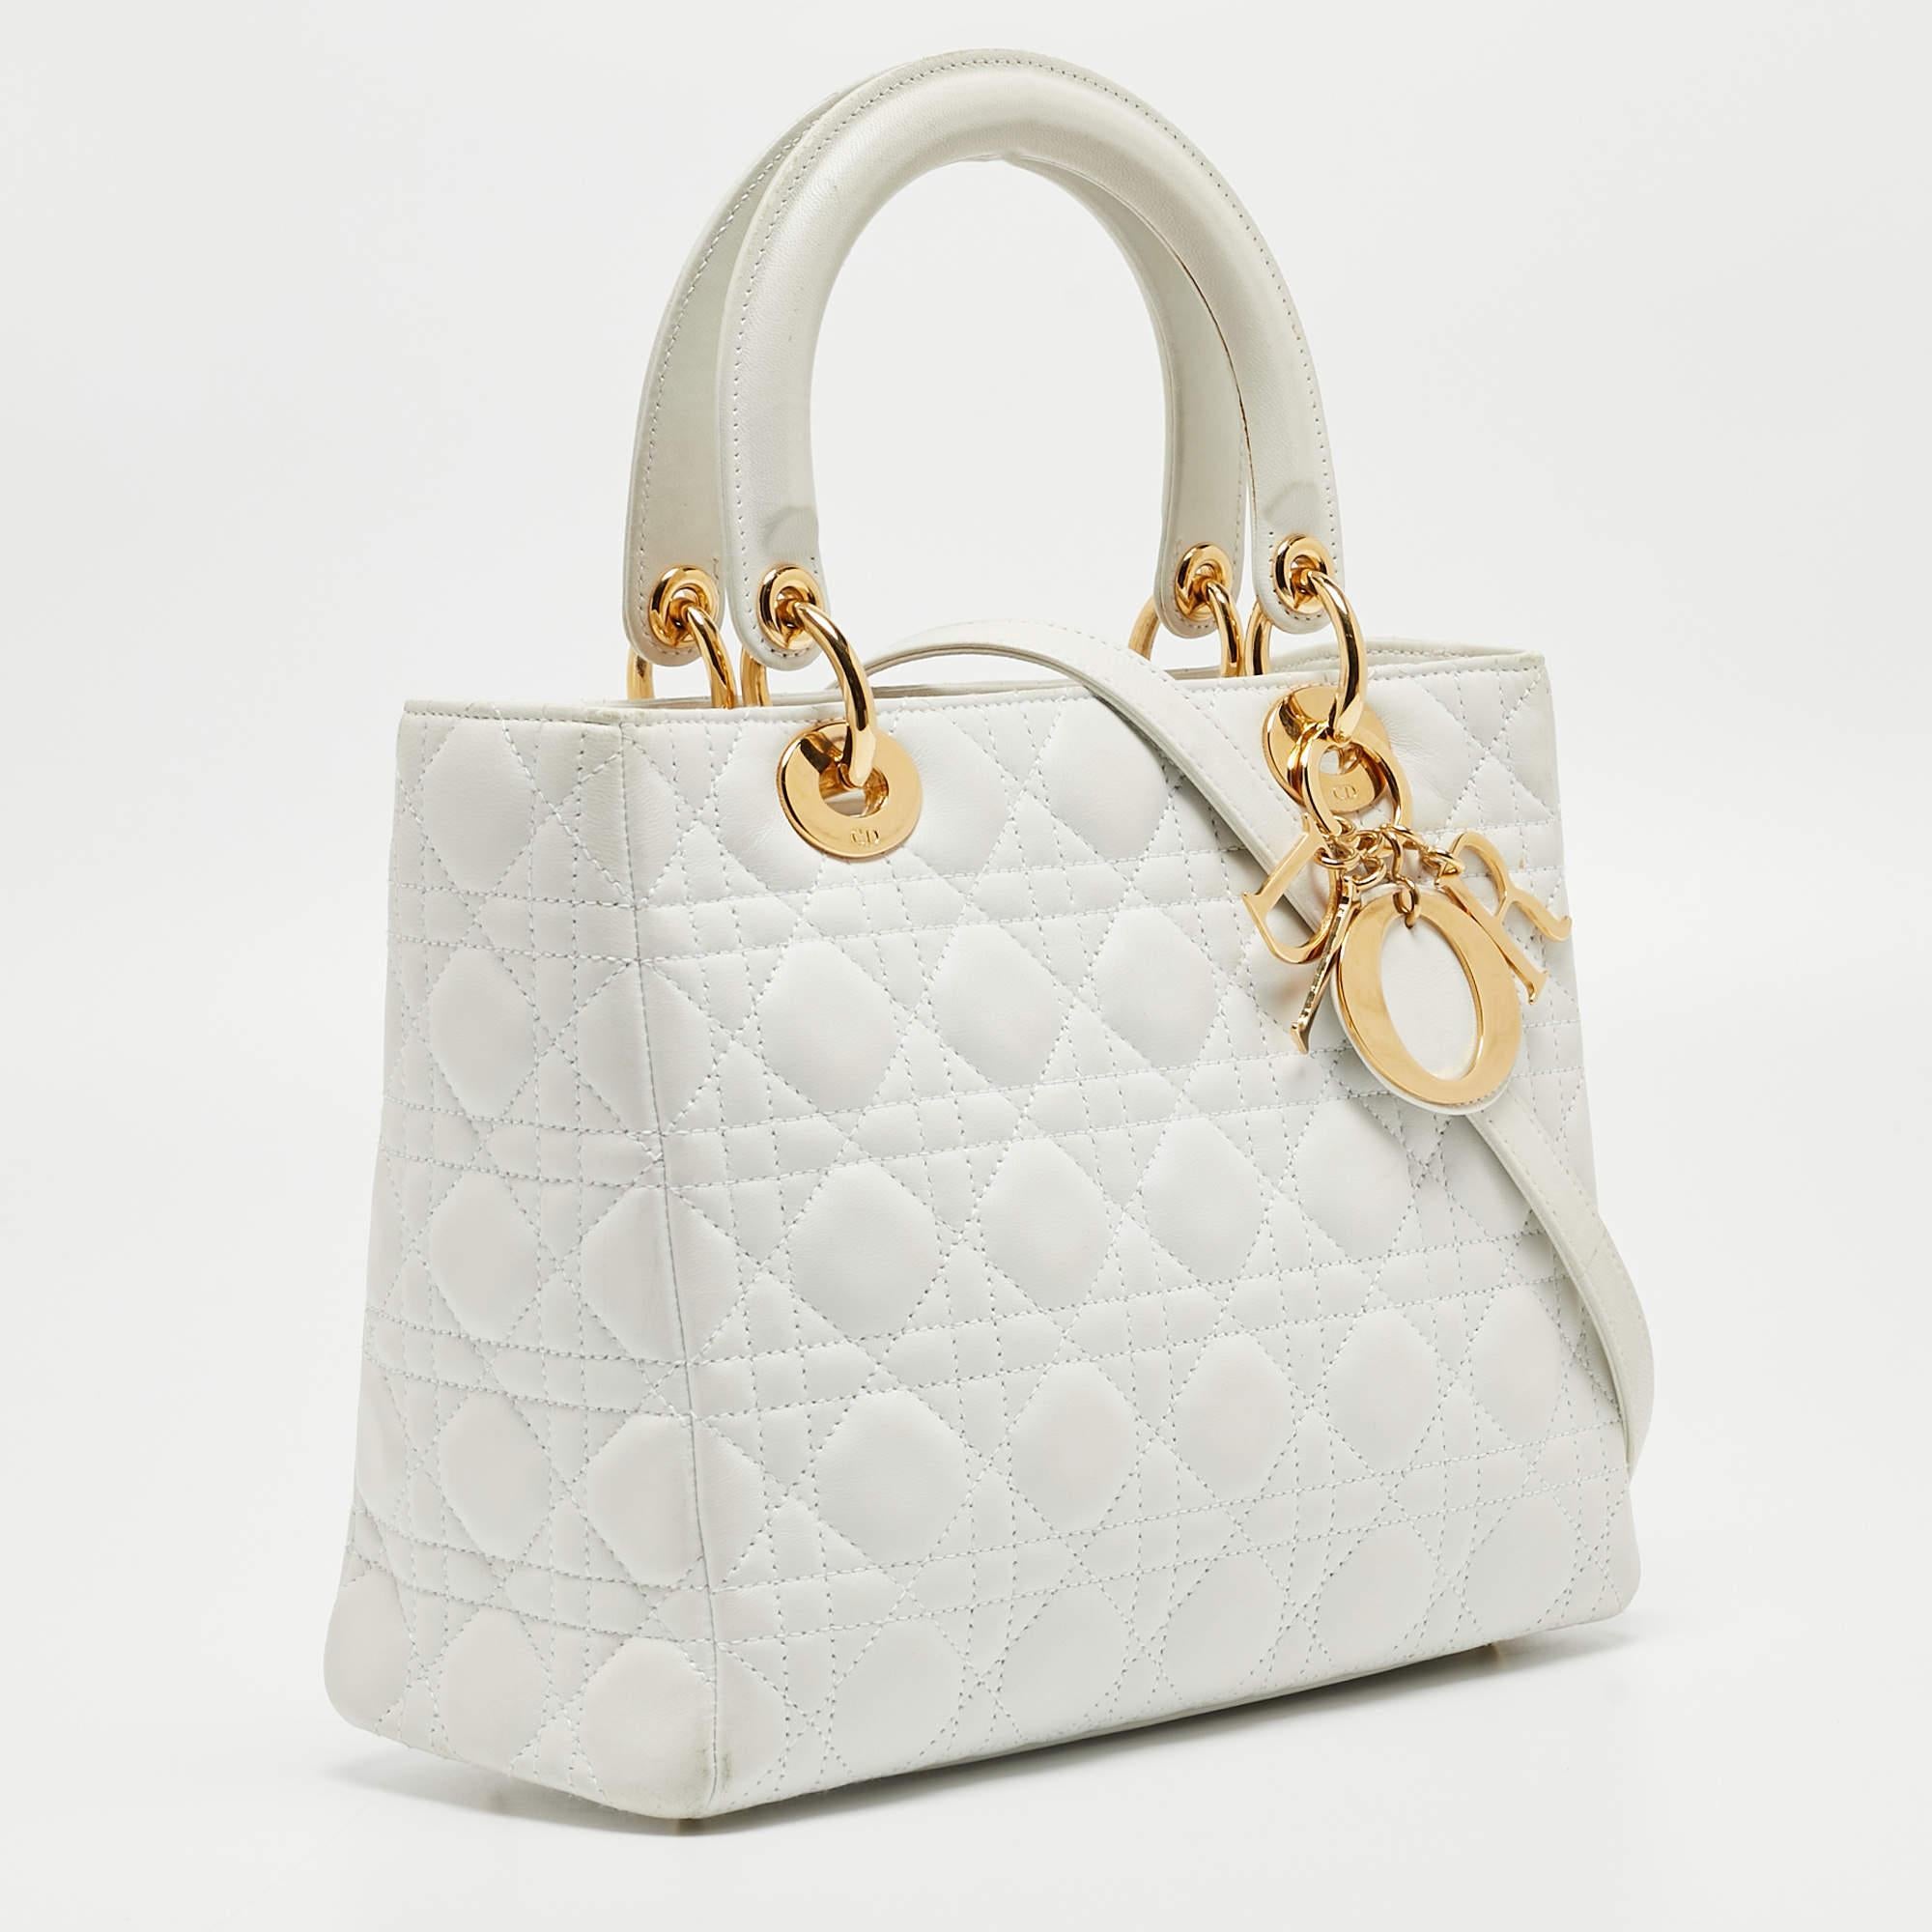 Dior White Cannage Leather Medium Lady Dior Tote In Good Condition For Sale In Dubai, Al Qouz 2